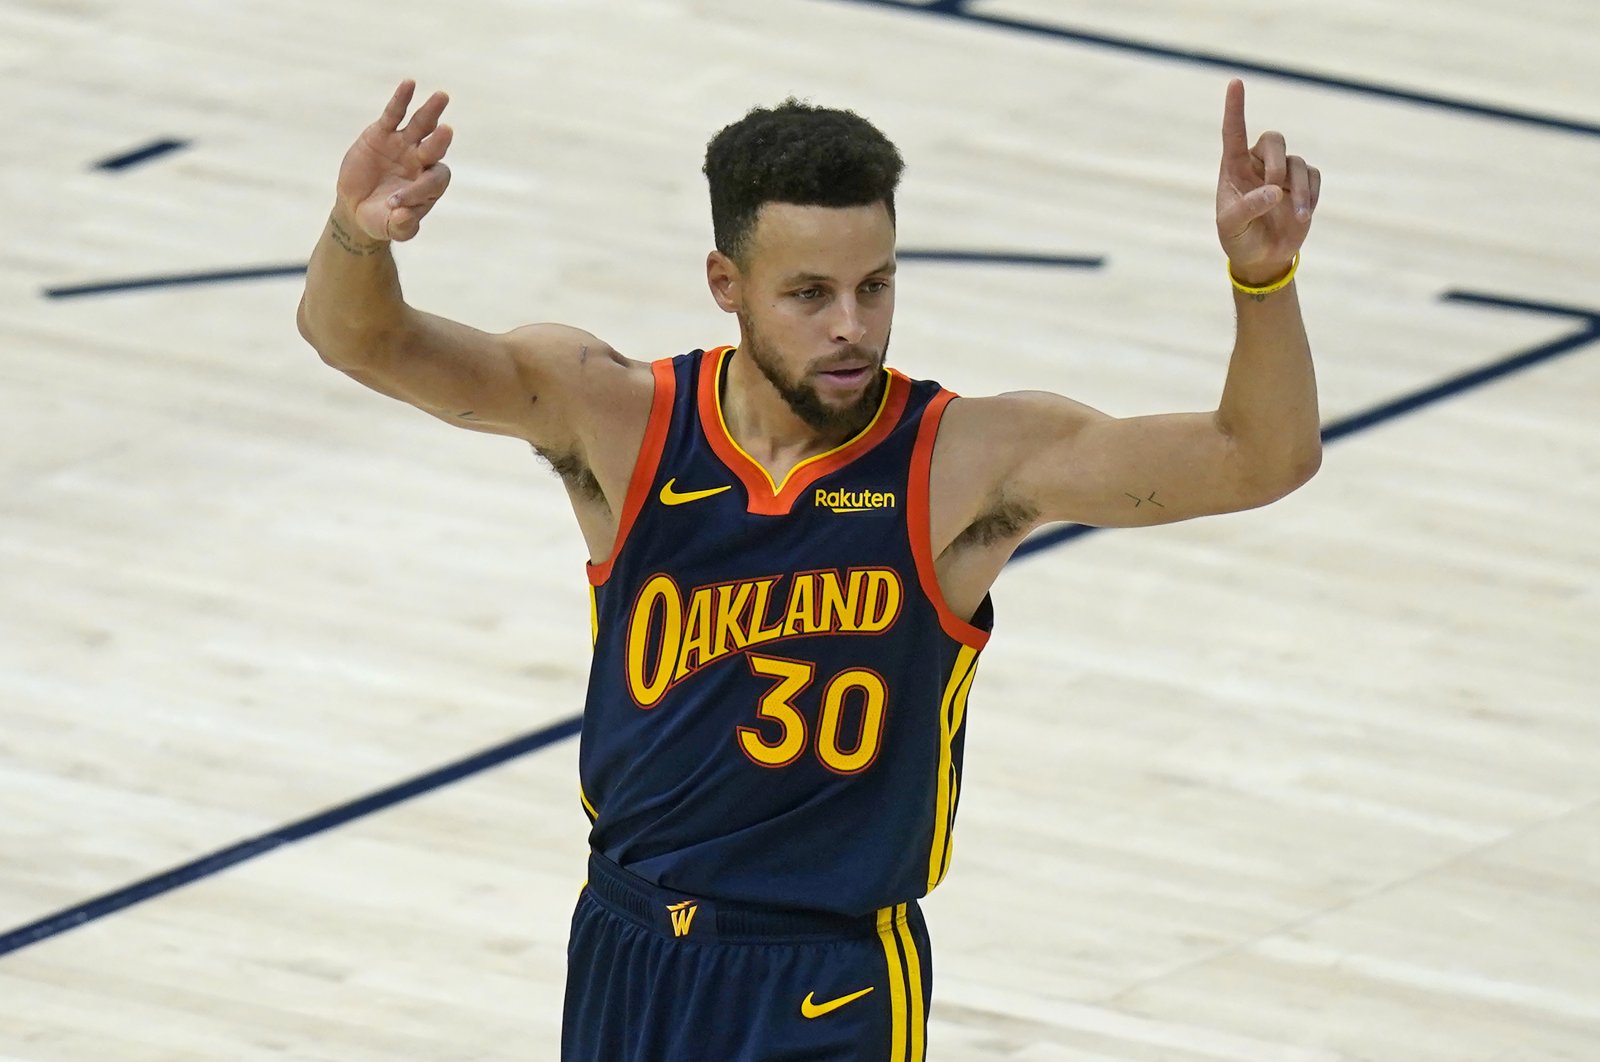 Golden State Warriors guard Stephen Curry celebrates scoring a 3-pointer against the Utah Jazz in an NBA game, Salt Lake City, Jan. 23, 2021. (AP Photo)